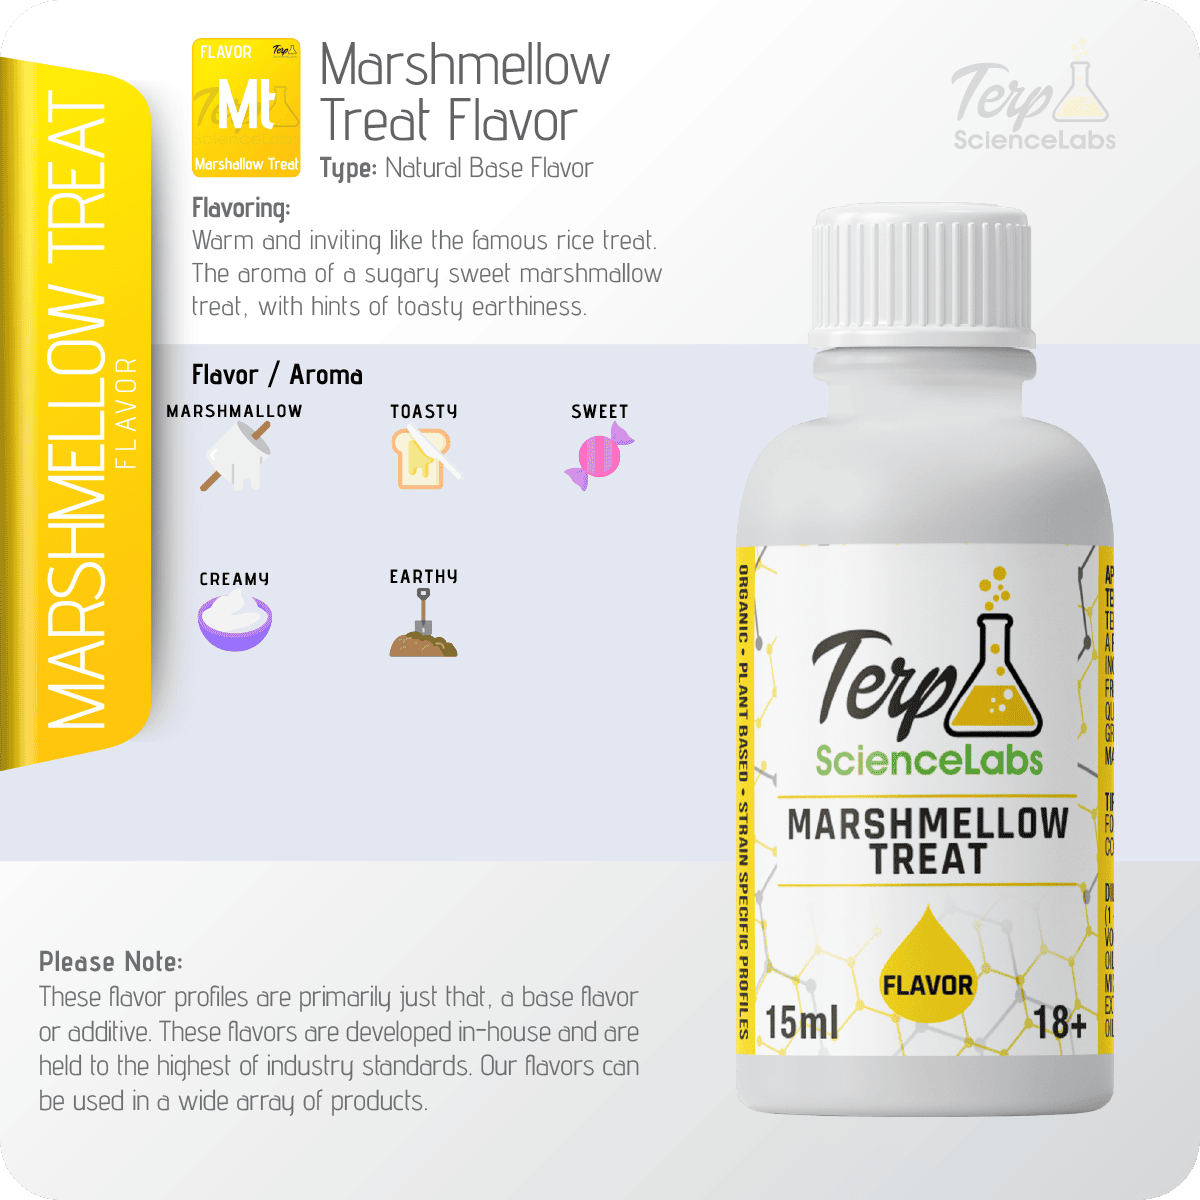 Marshmallow Treat Flavor Profile